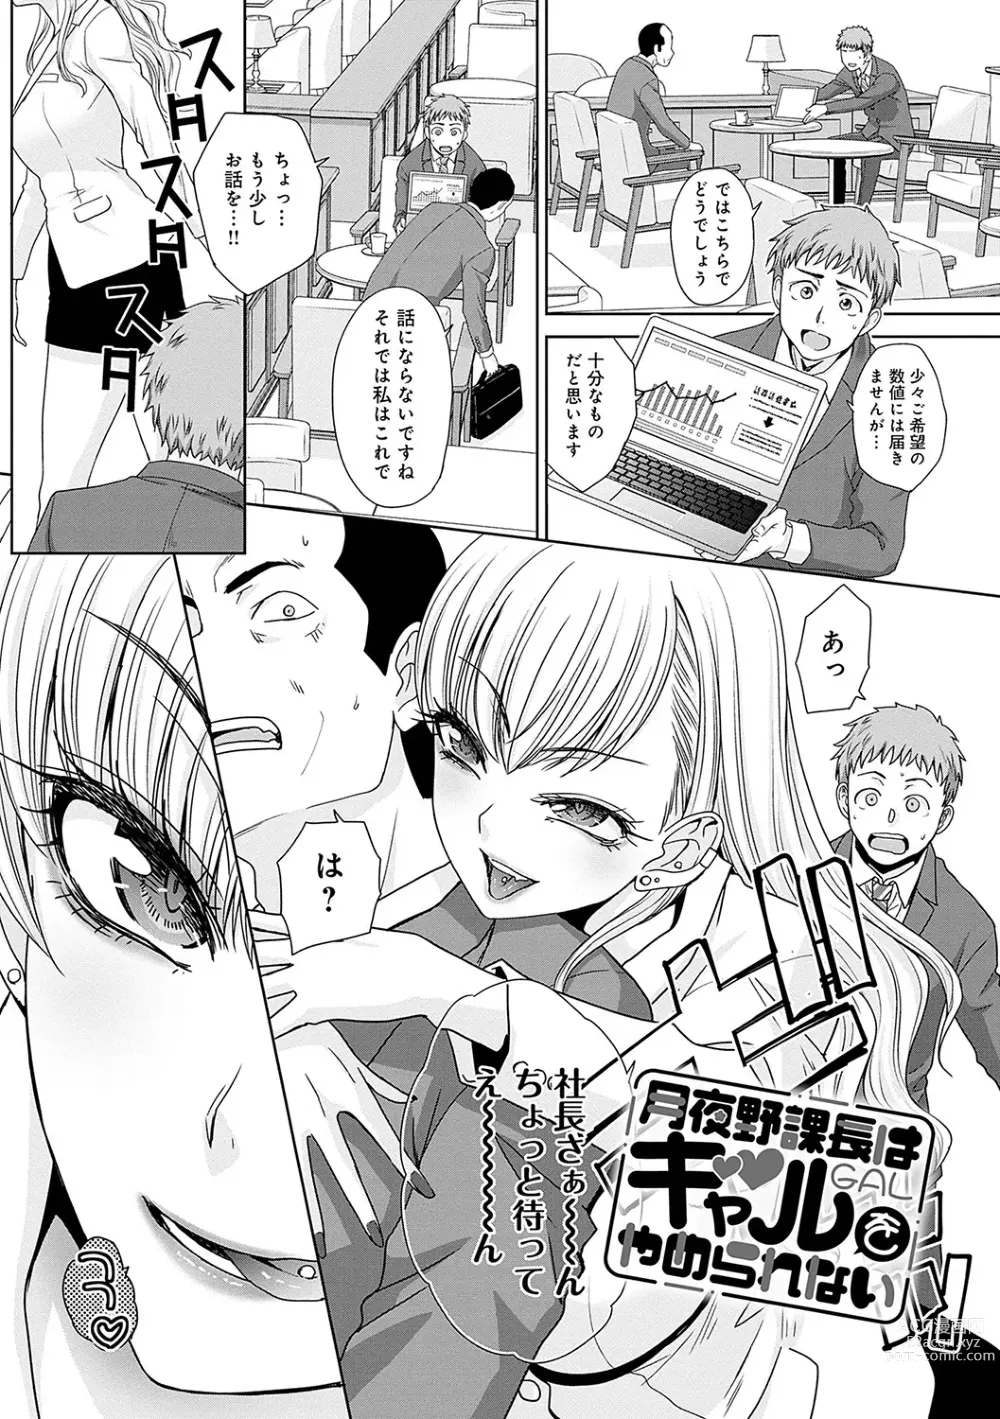 Page 4 of manga Tsukiyono Kachou wa Gal o Yamerarenai  - Tsukiyono The manager cant quit a gal